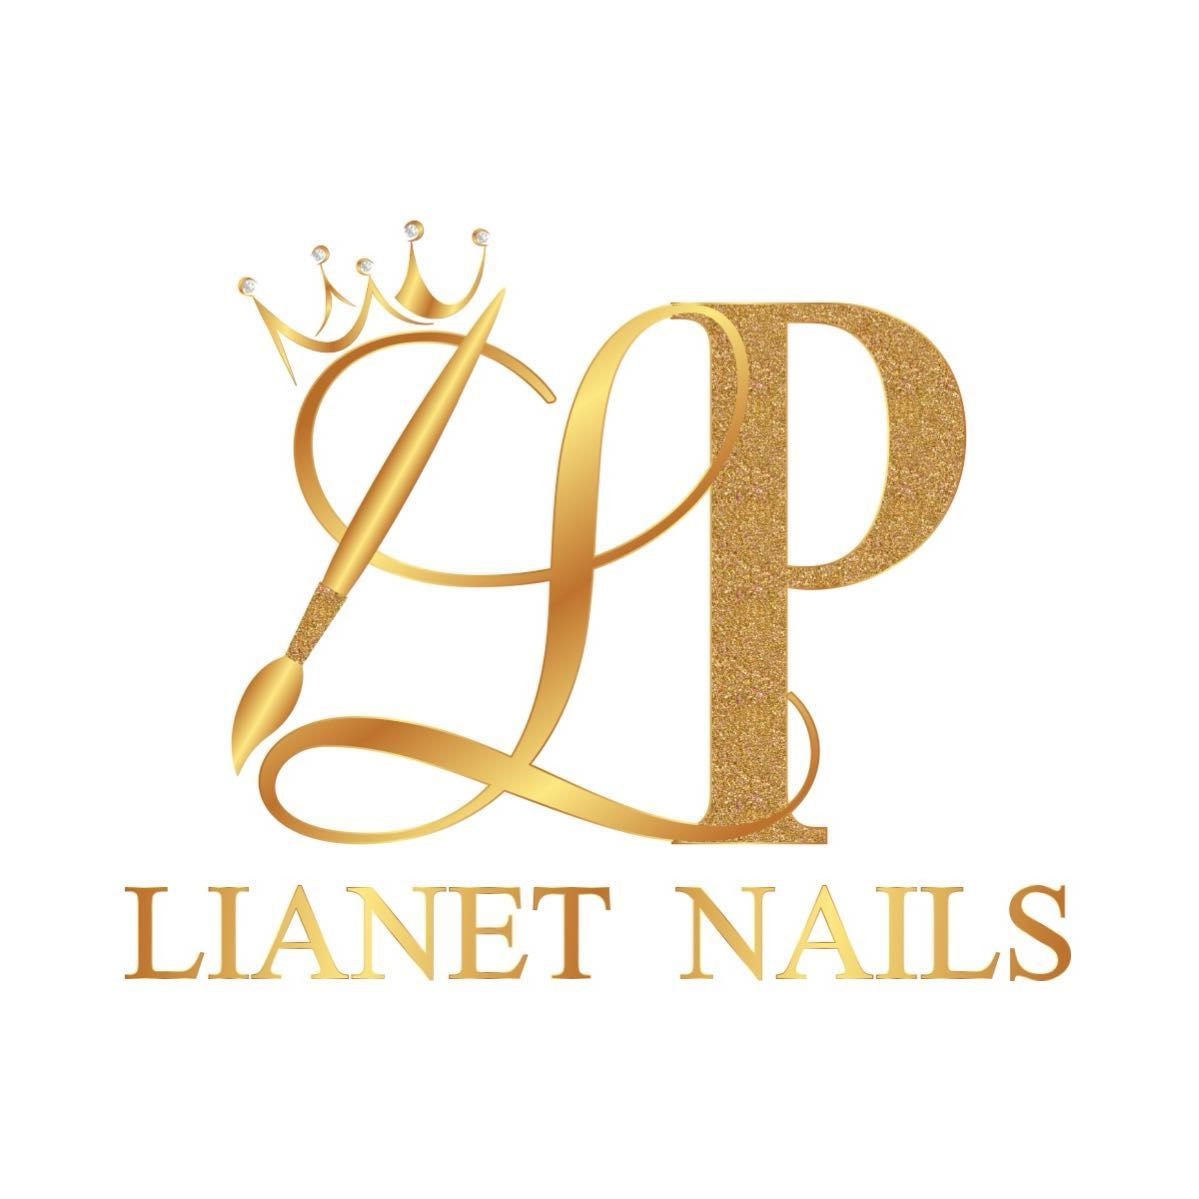 LP LIANET NAILS LLC, 15100 NW 67th Ave Unit 110, Suite 114, Miami Lakes, 33014